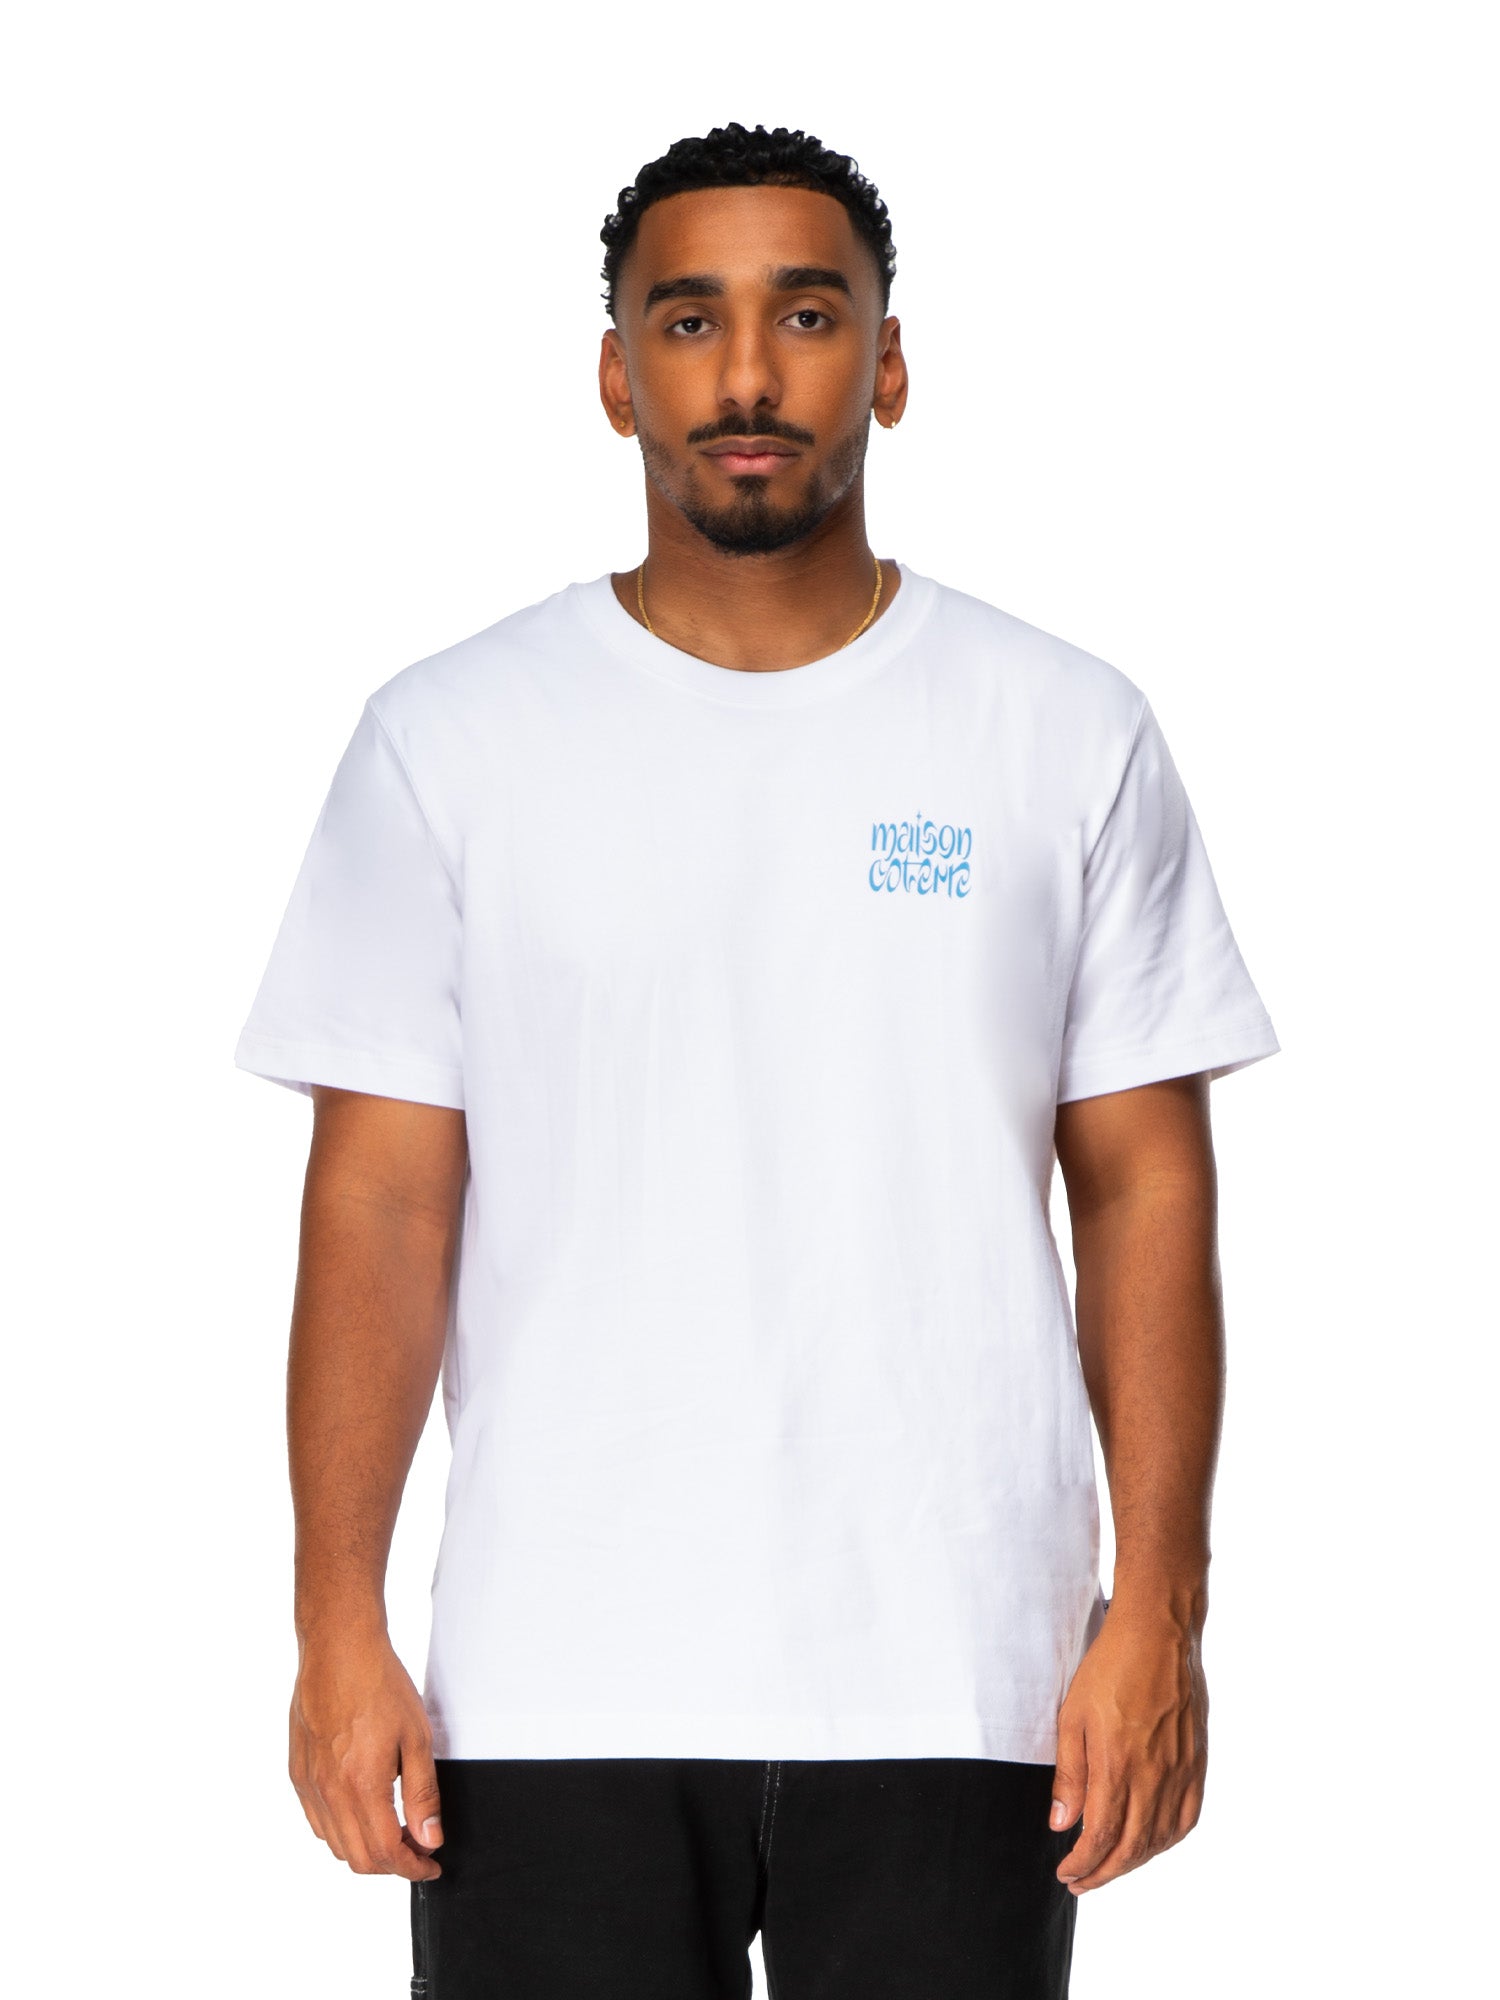 Michael - Graphic T-Shirt - White